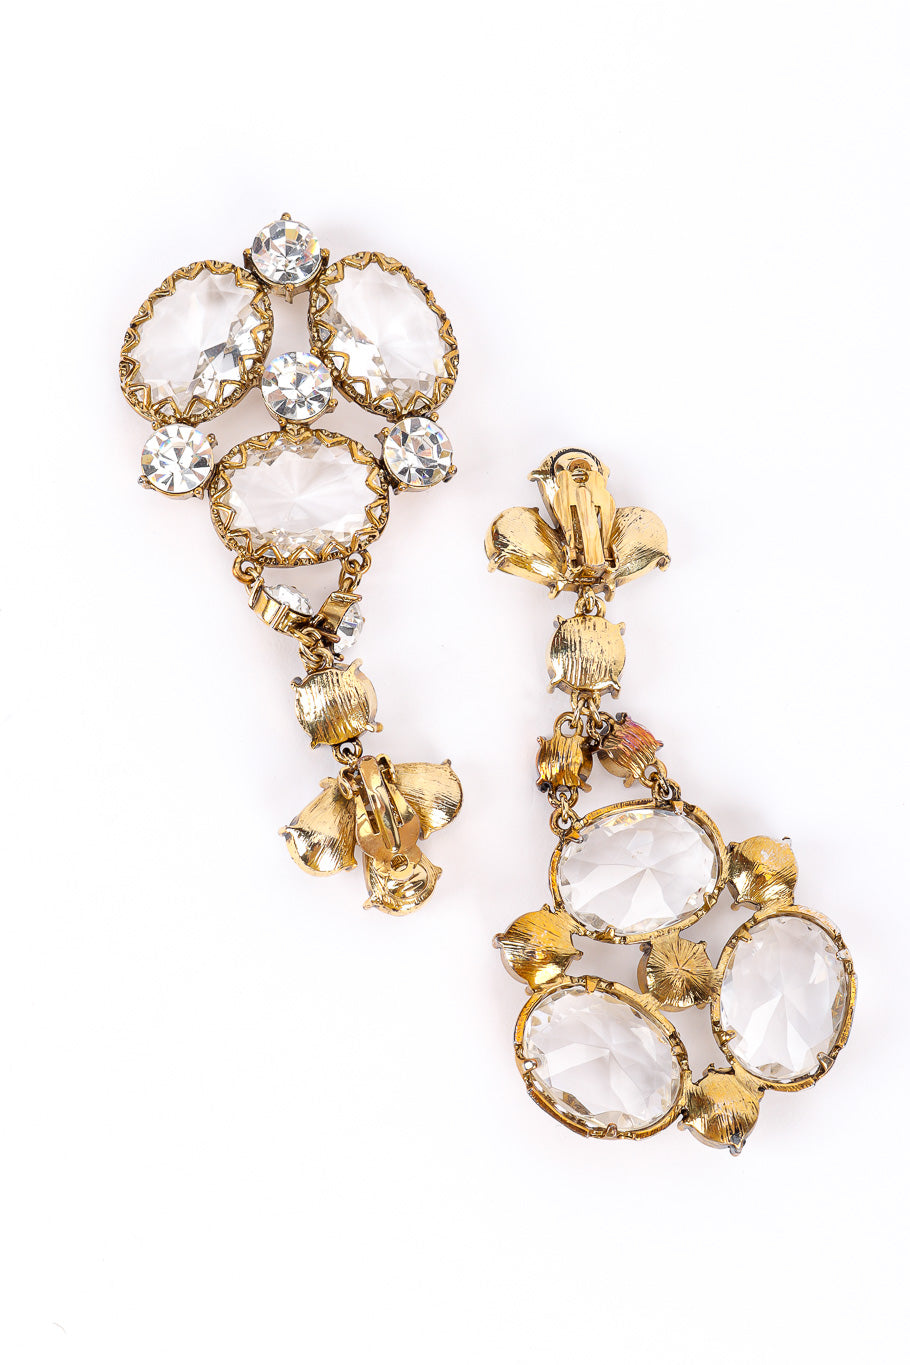 Vintage Crystal Cluster Chandelier Earrings back view on white background @Recessla